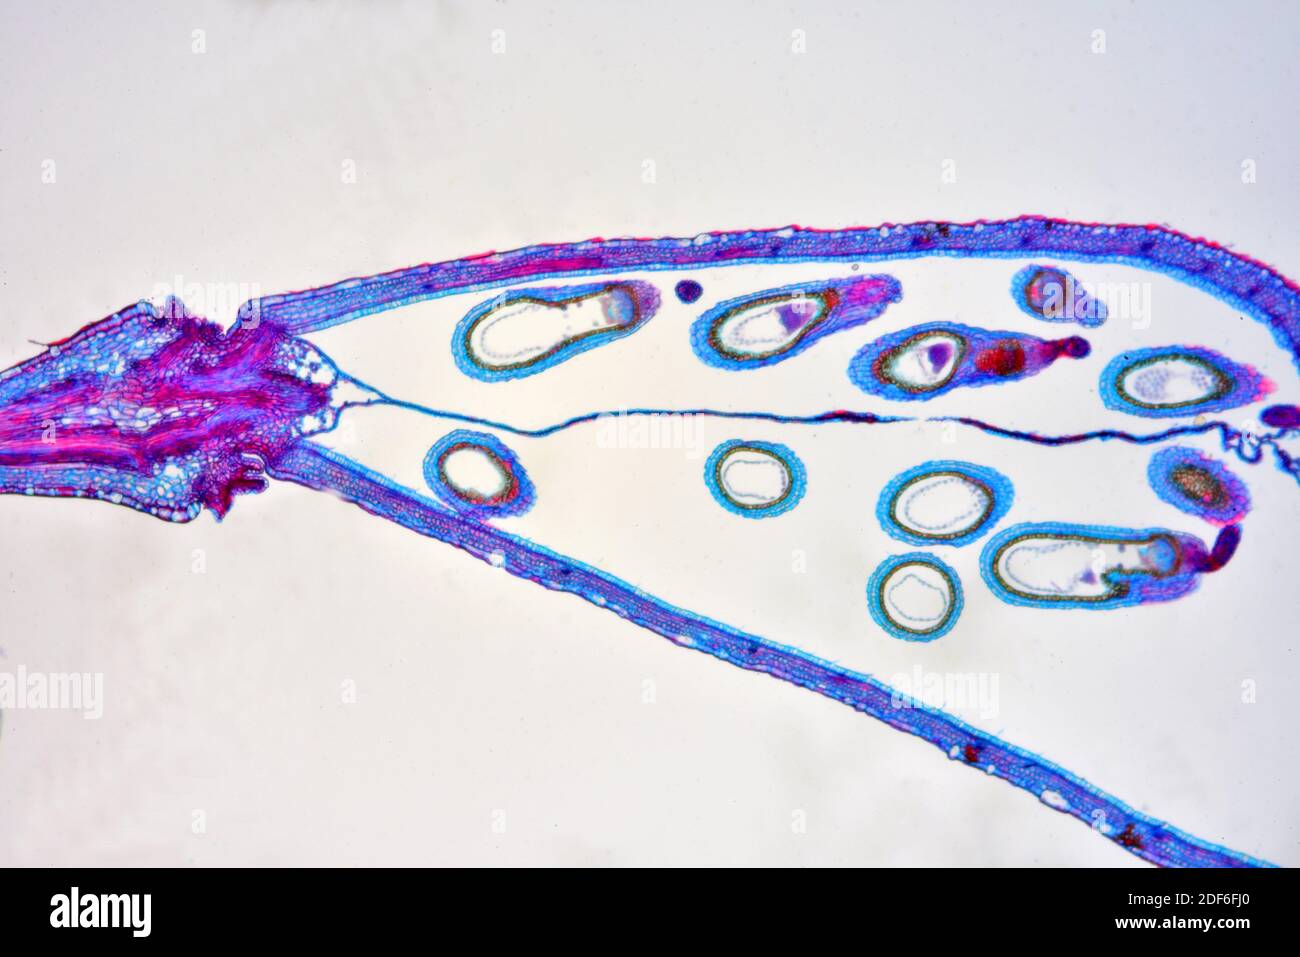 Ovario con embriones de bolso de pastor (Capsella bursa-pastoris). Microscopio óptico X40. Foto de stock